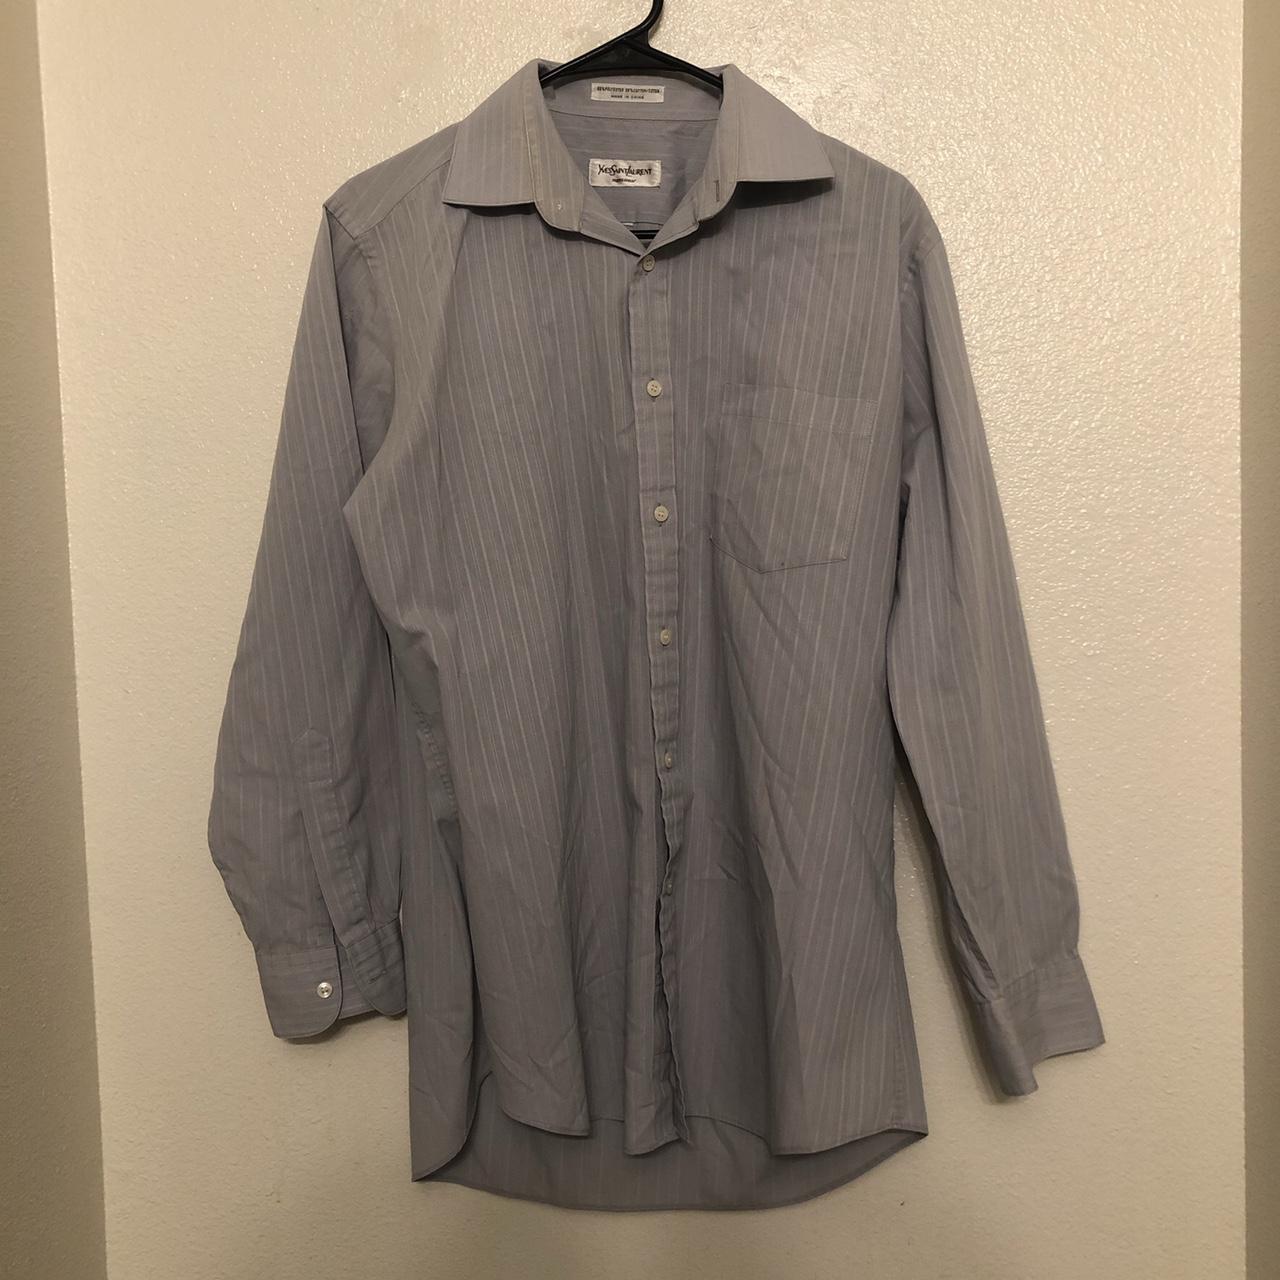 Vintage Yves Saint Laurent Dress Shirt White Button Up No Size Tag